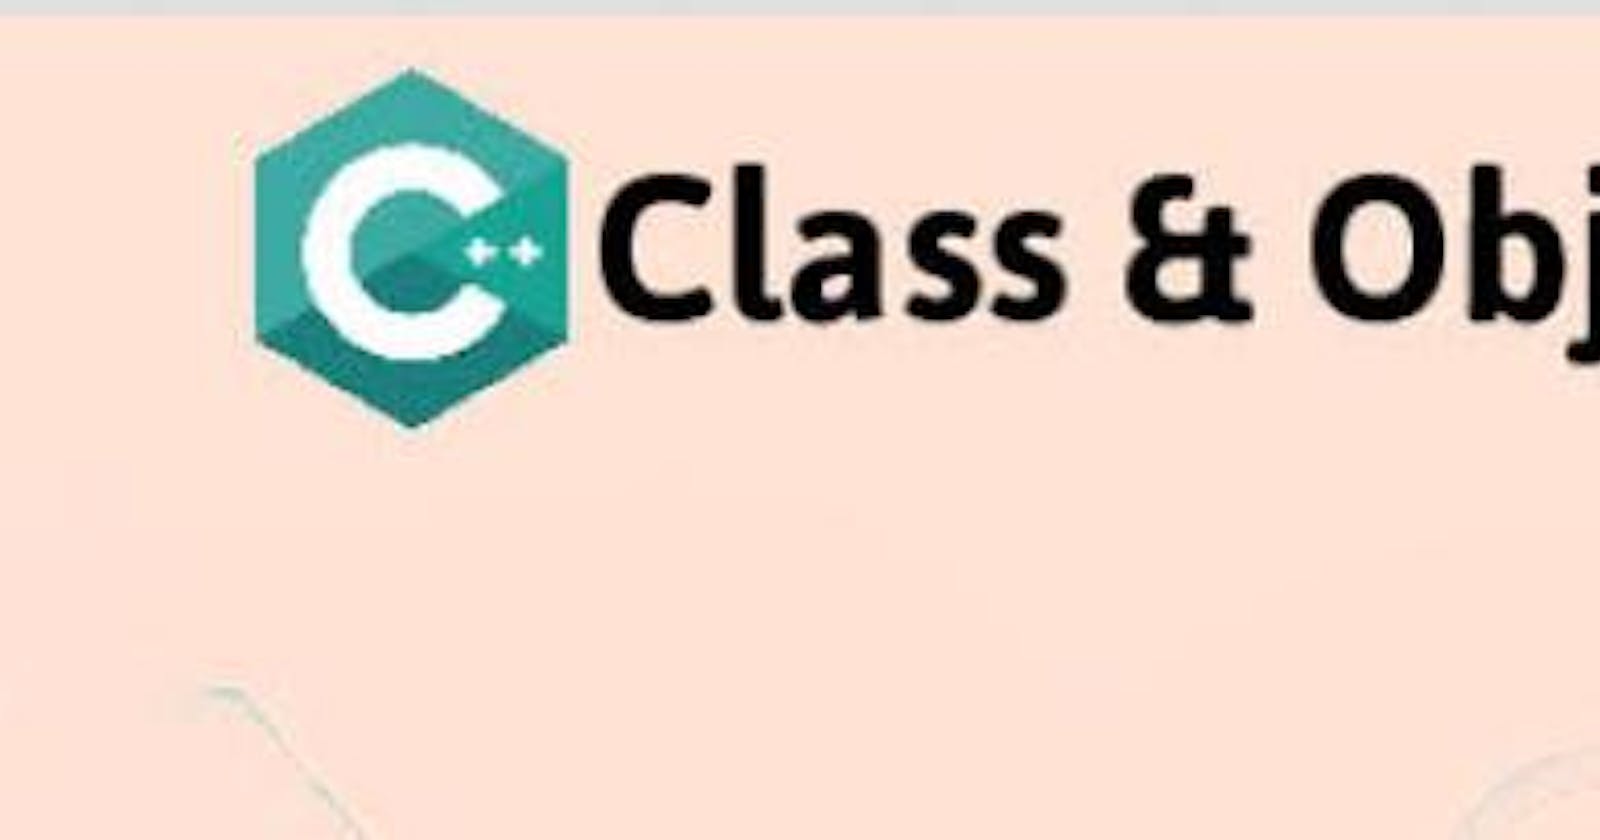 C++ Classes & Objects